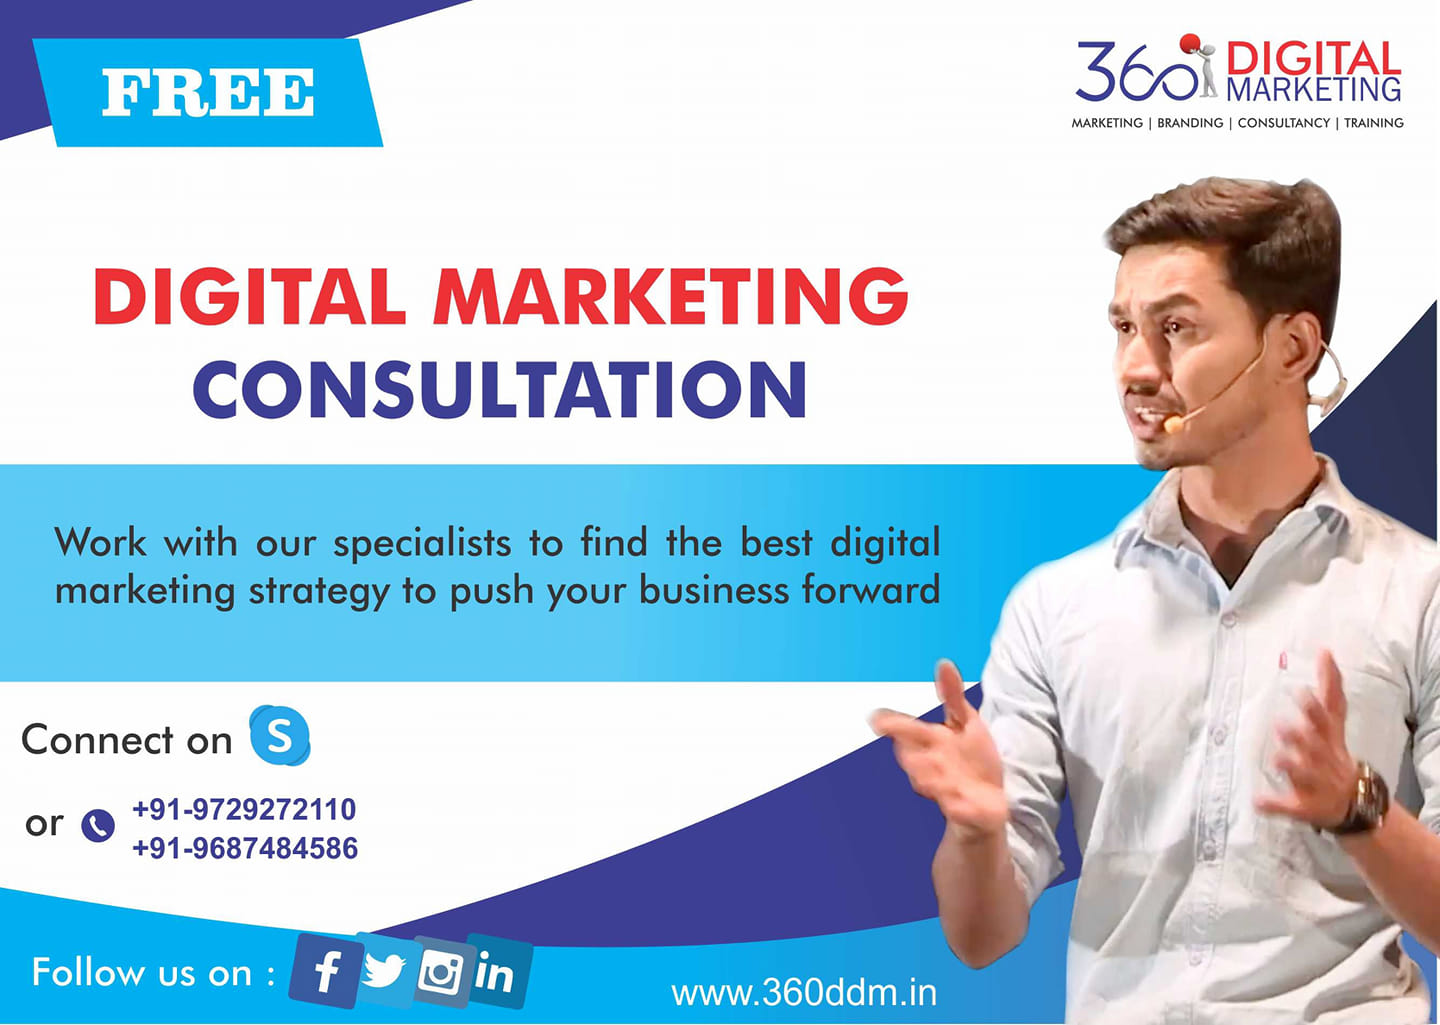 360Degree Digital Marketing – Providing A Unique Concept In Digital Marketing